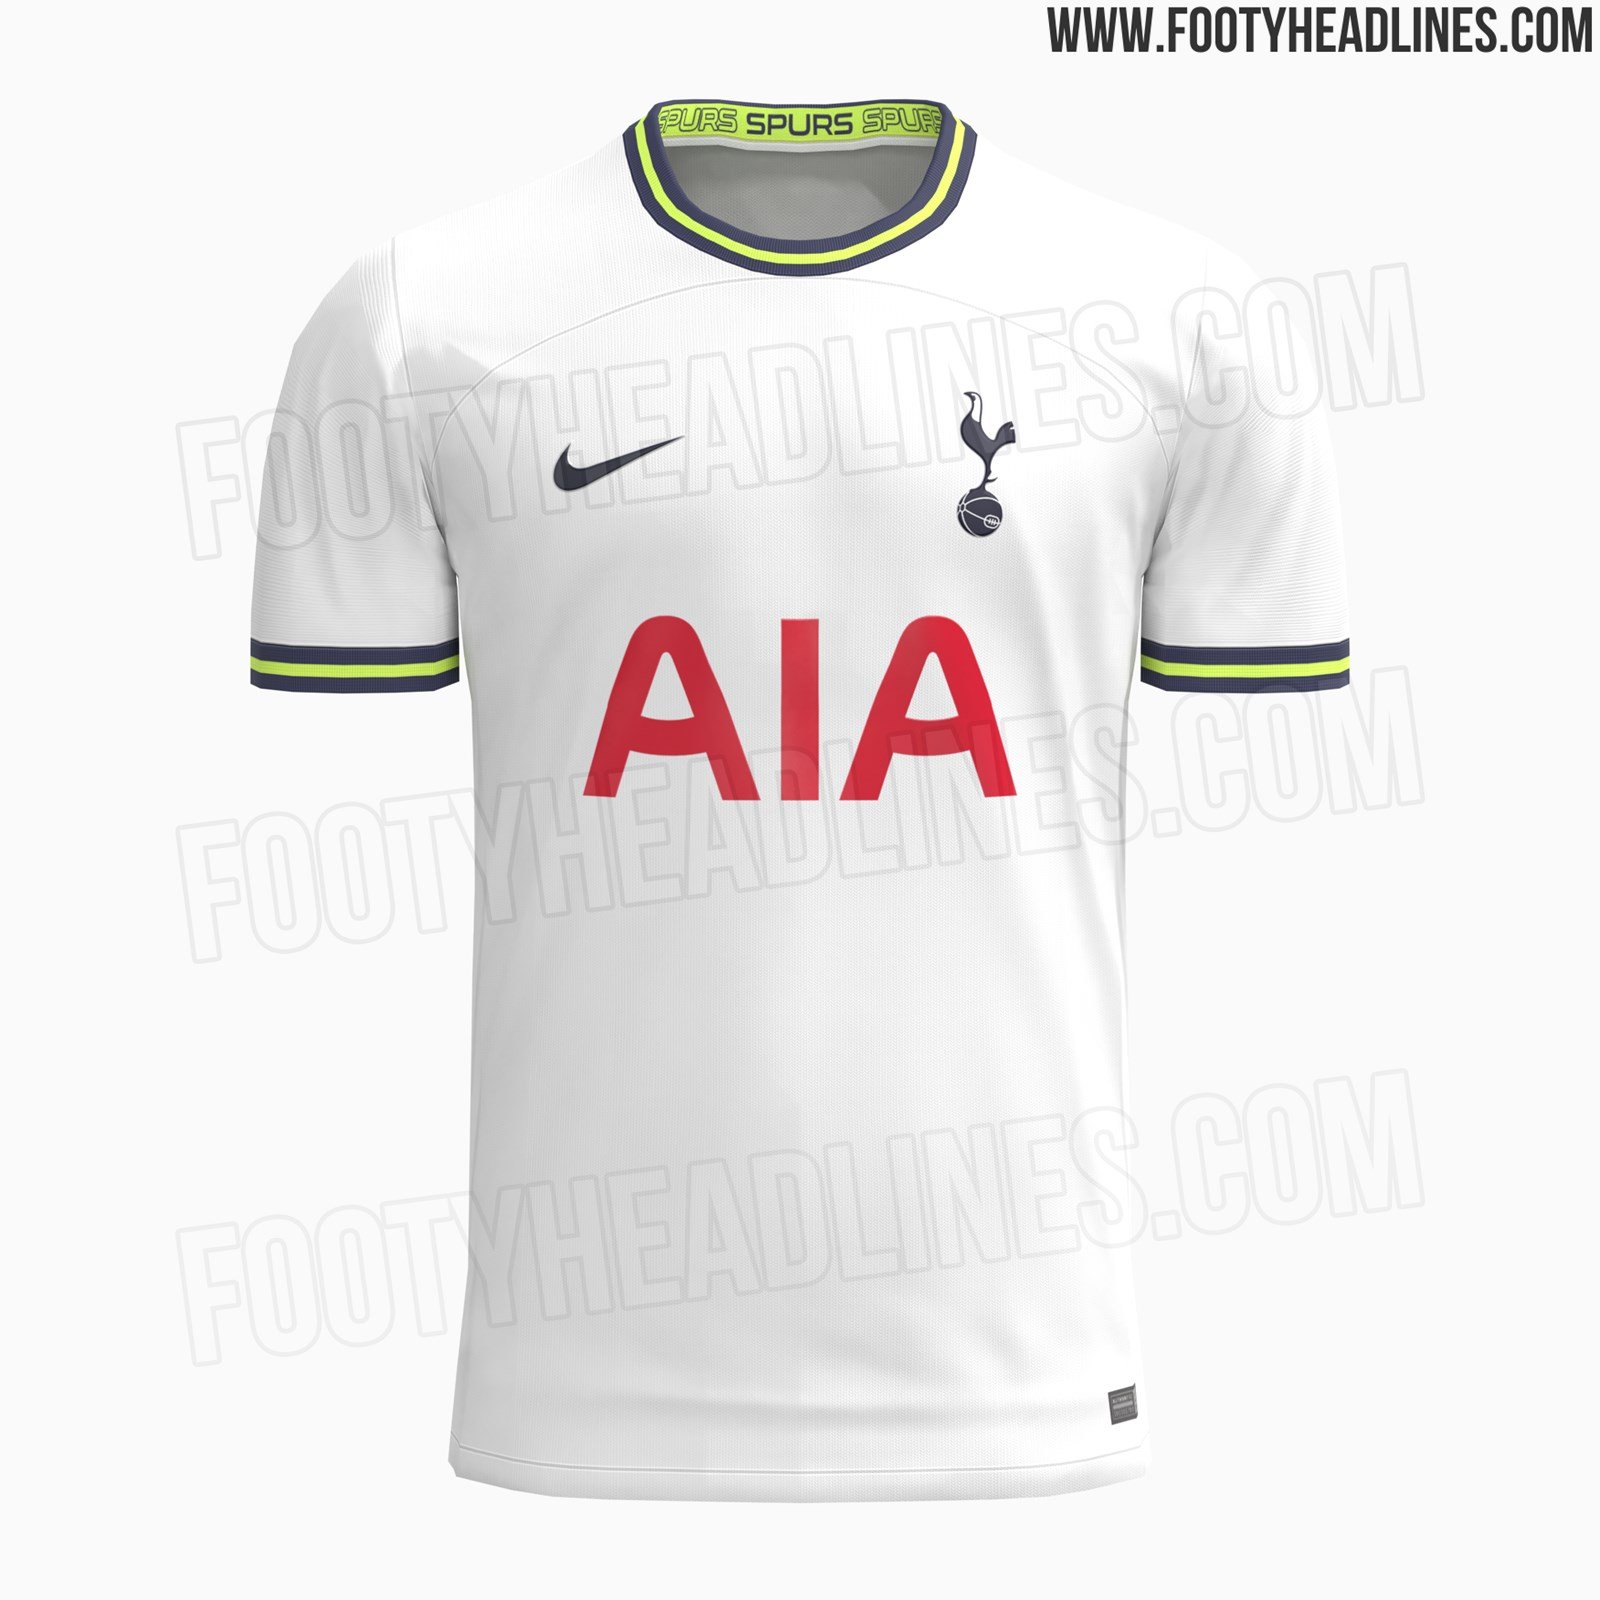 Tottenham's new Nike kit leaked ahead of 2020/21 season: Pictures of home  shirt 